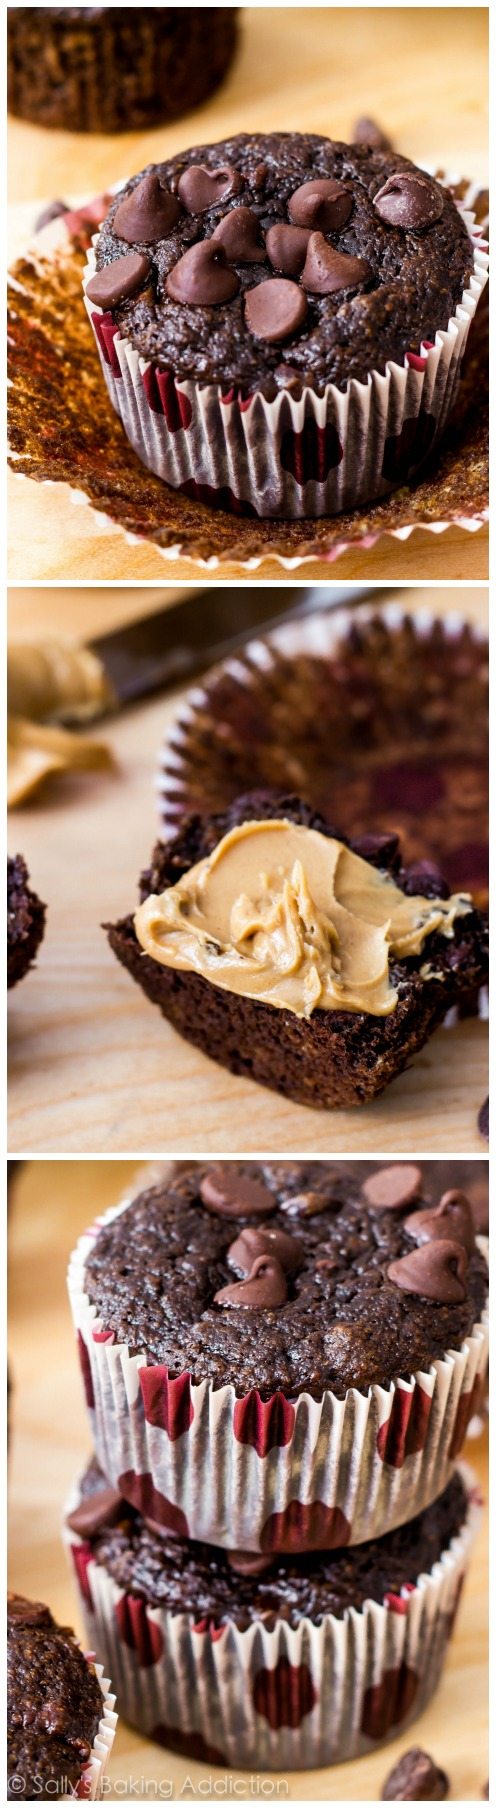 3 images of chocolate banana muffins